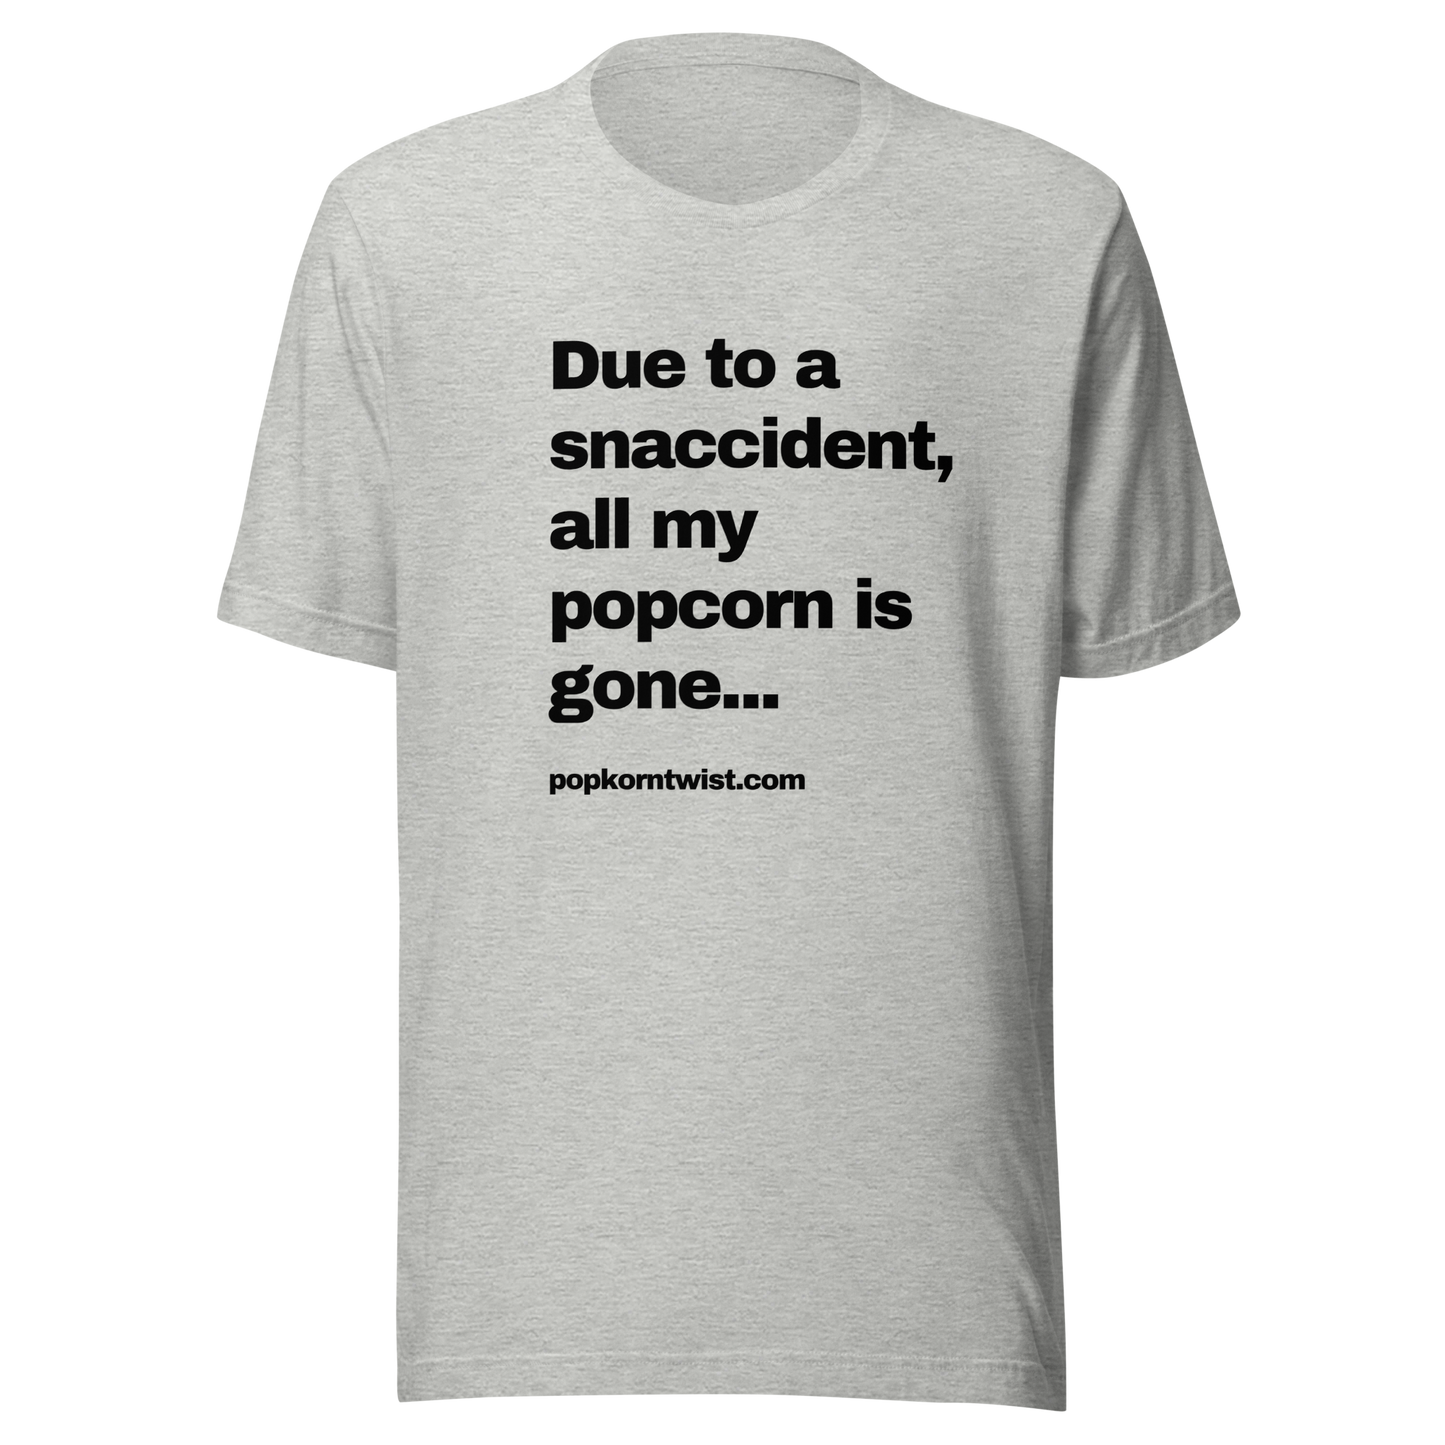 T-shirt - Snaccident (black lettering)